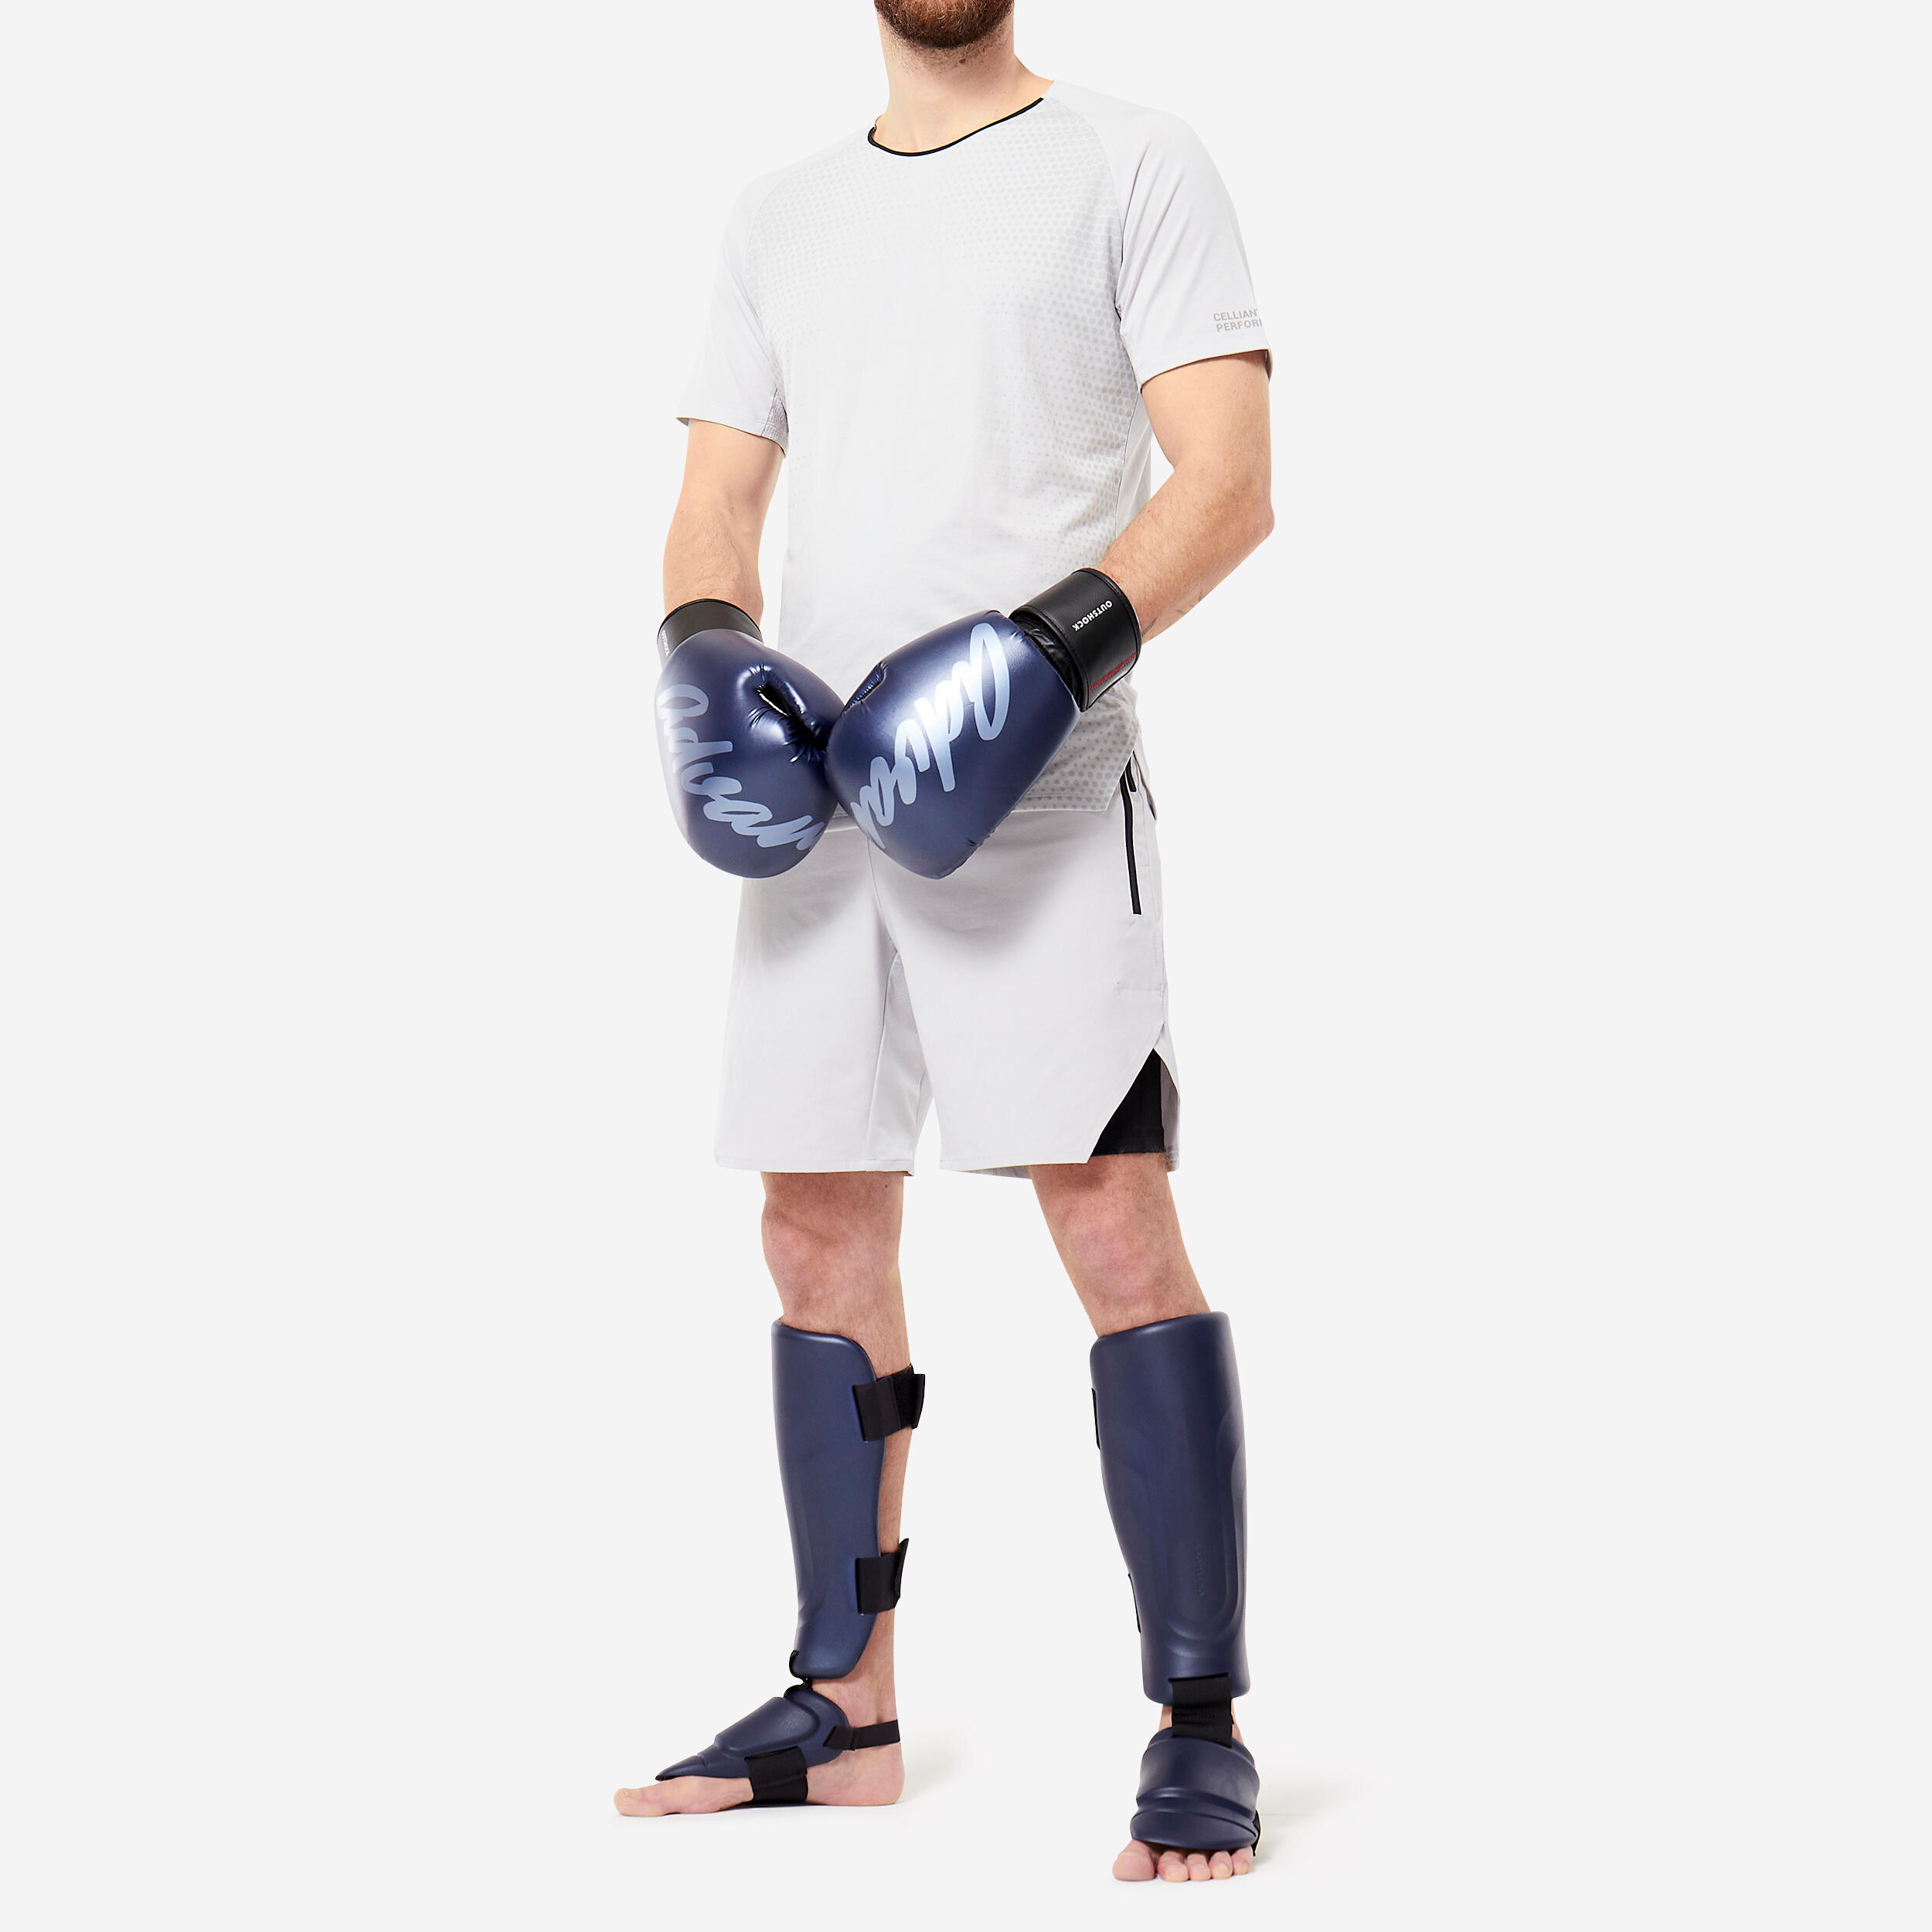 Kickboxing/Muay Thai Gloves - Blue 6/6